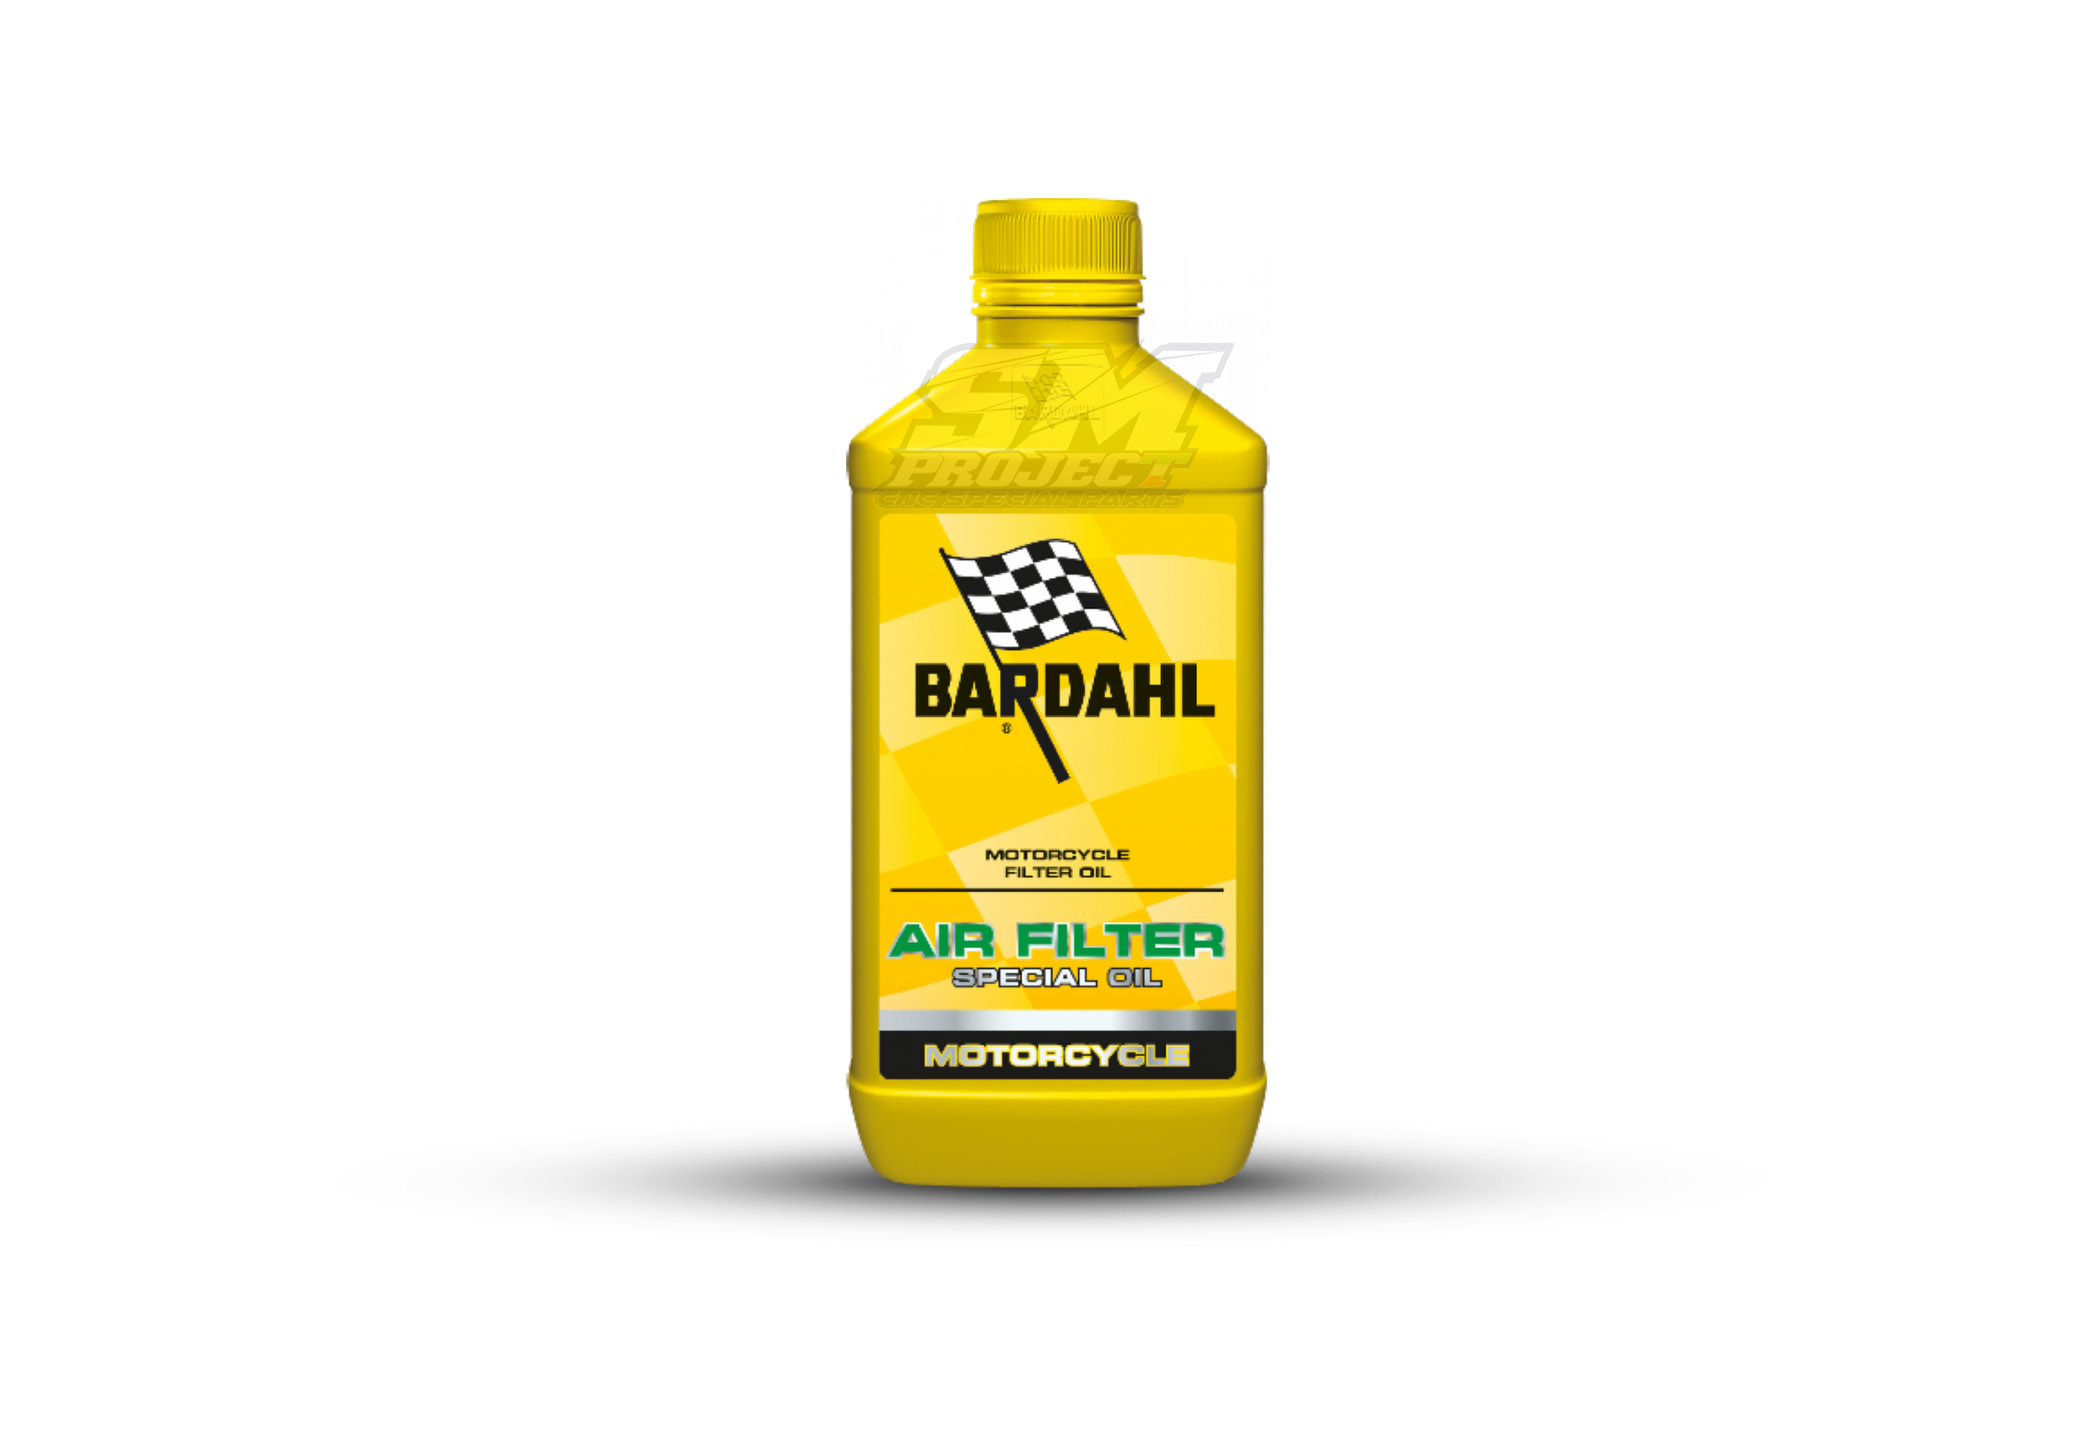 Filtre air special huile Bardahl 1 L - Pièces techniques - Moto & scooter